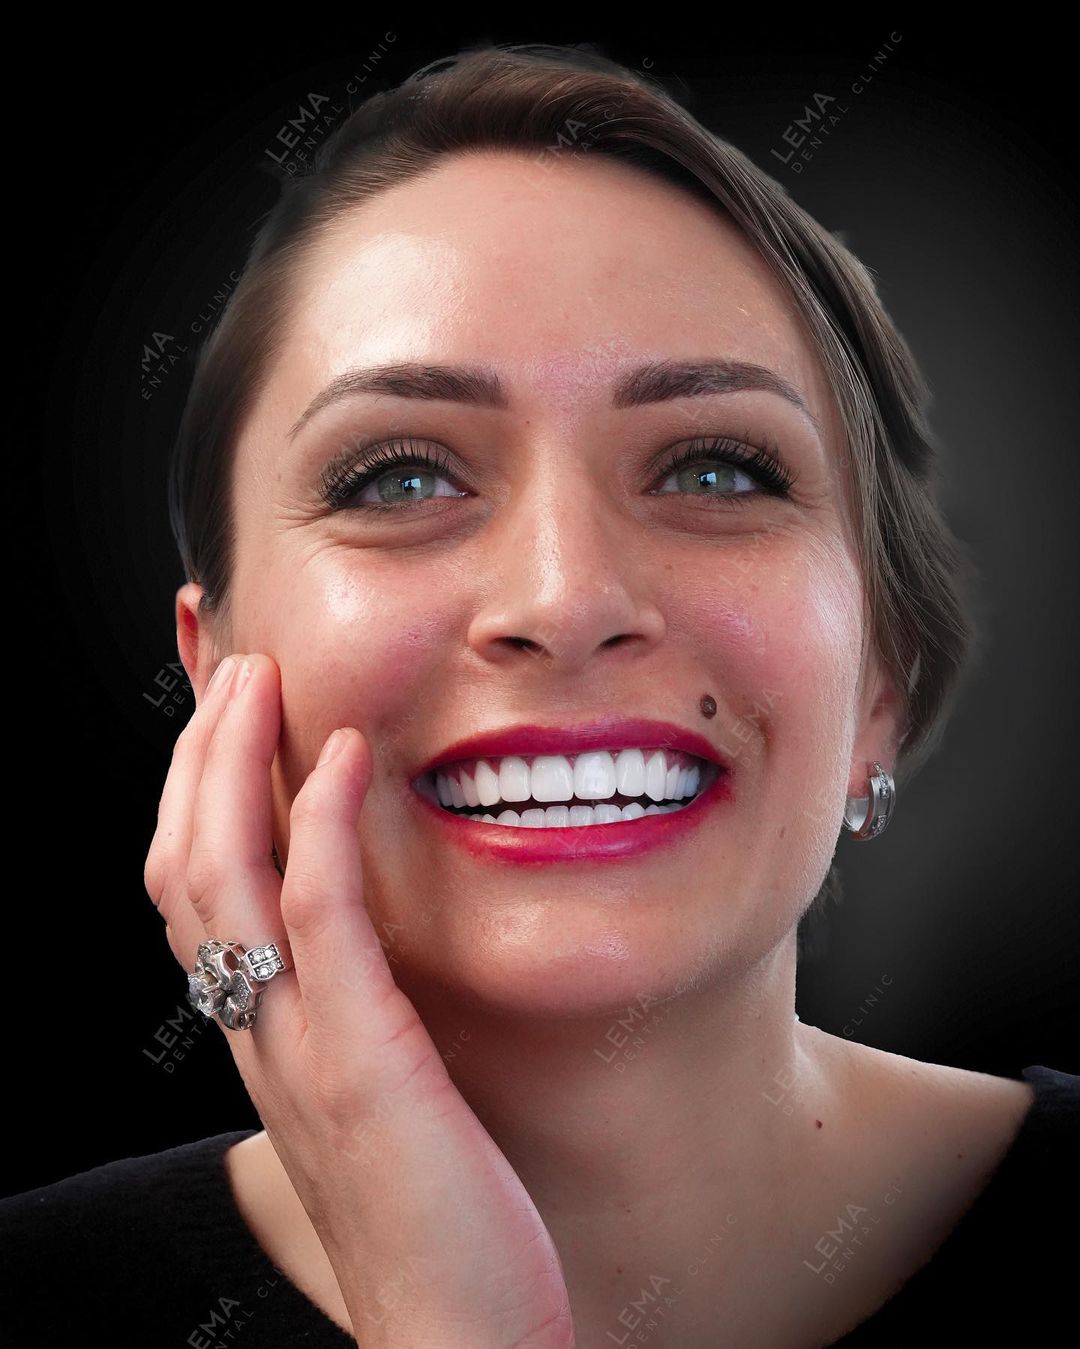  teeth whitening treatment